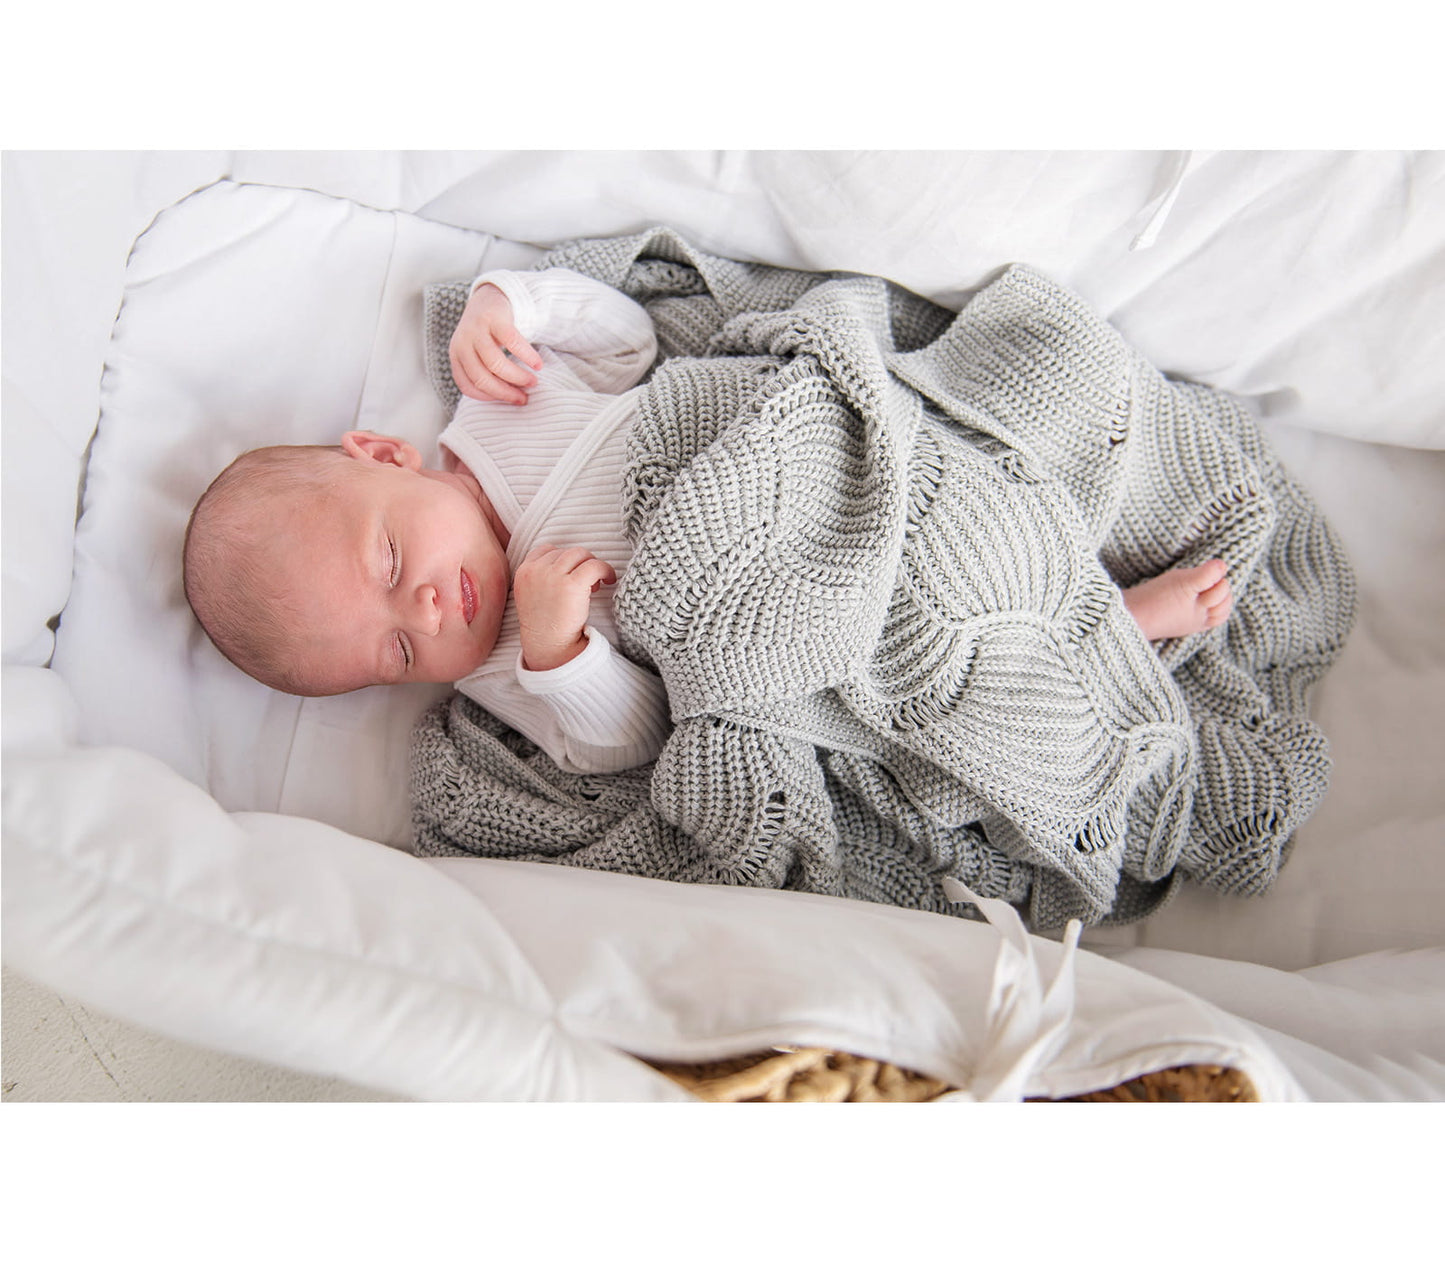 Cellular bamboo baby blanket - Grey - Seashell